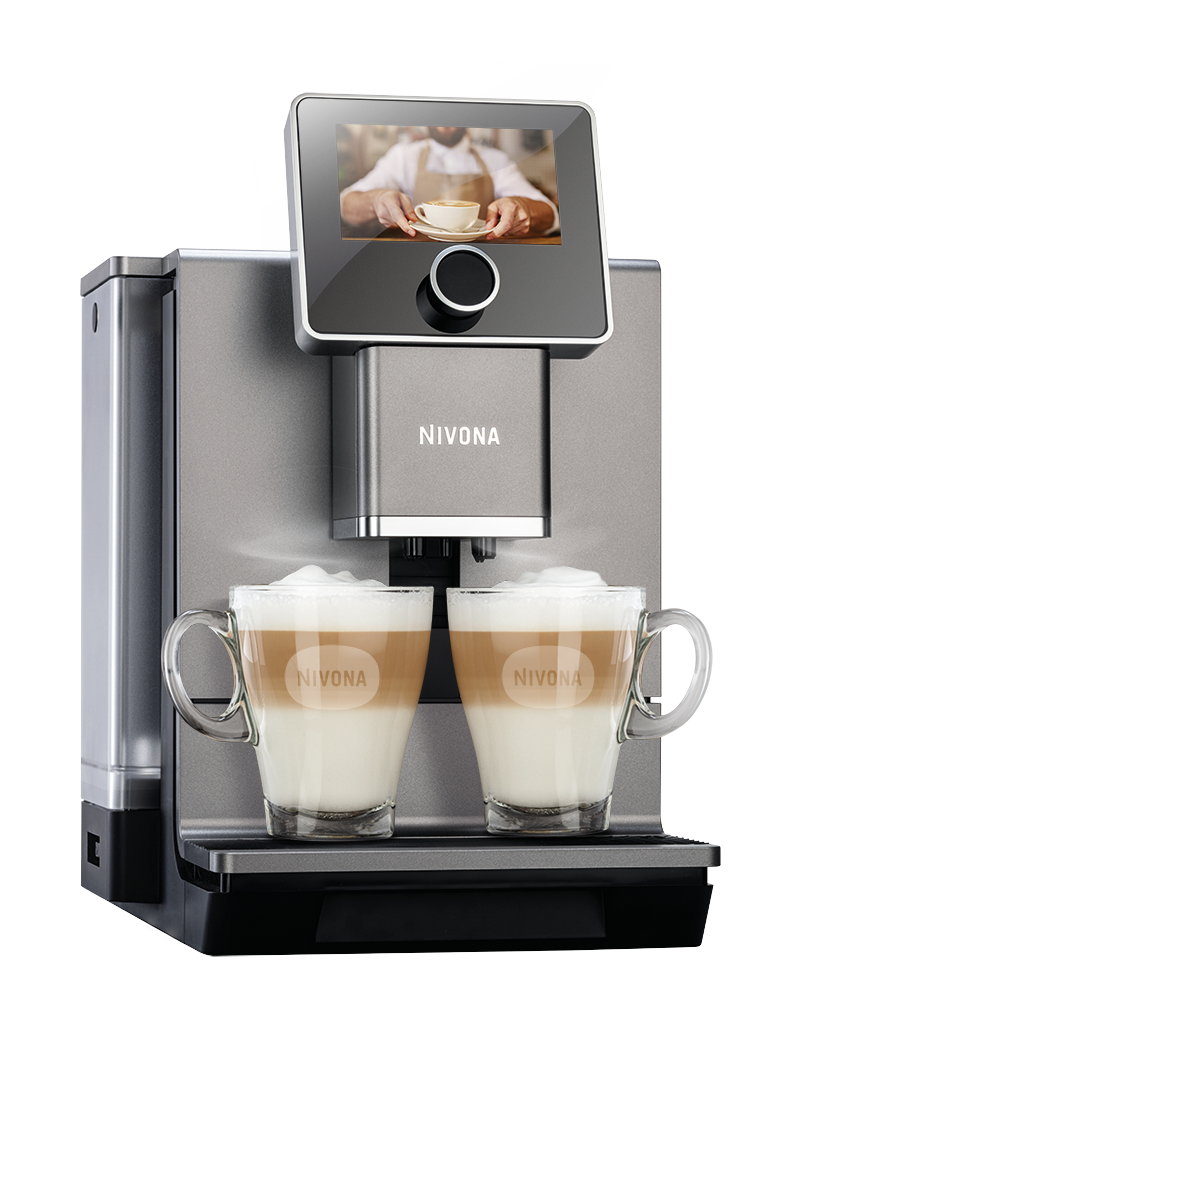 NIVONA CafeRomatica Kaffeevollautmat 9er NICR 970 Titan / Chrom